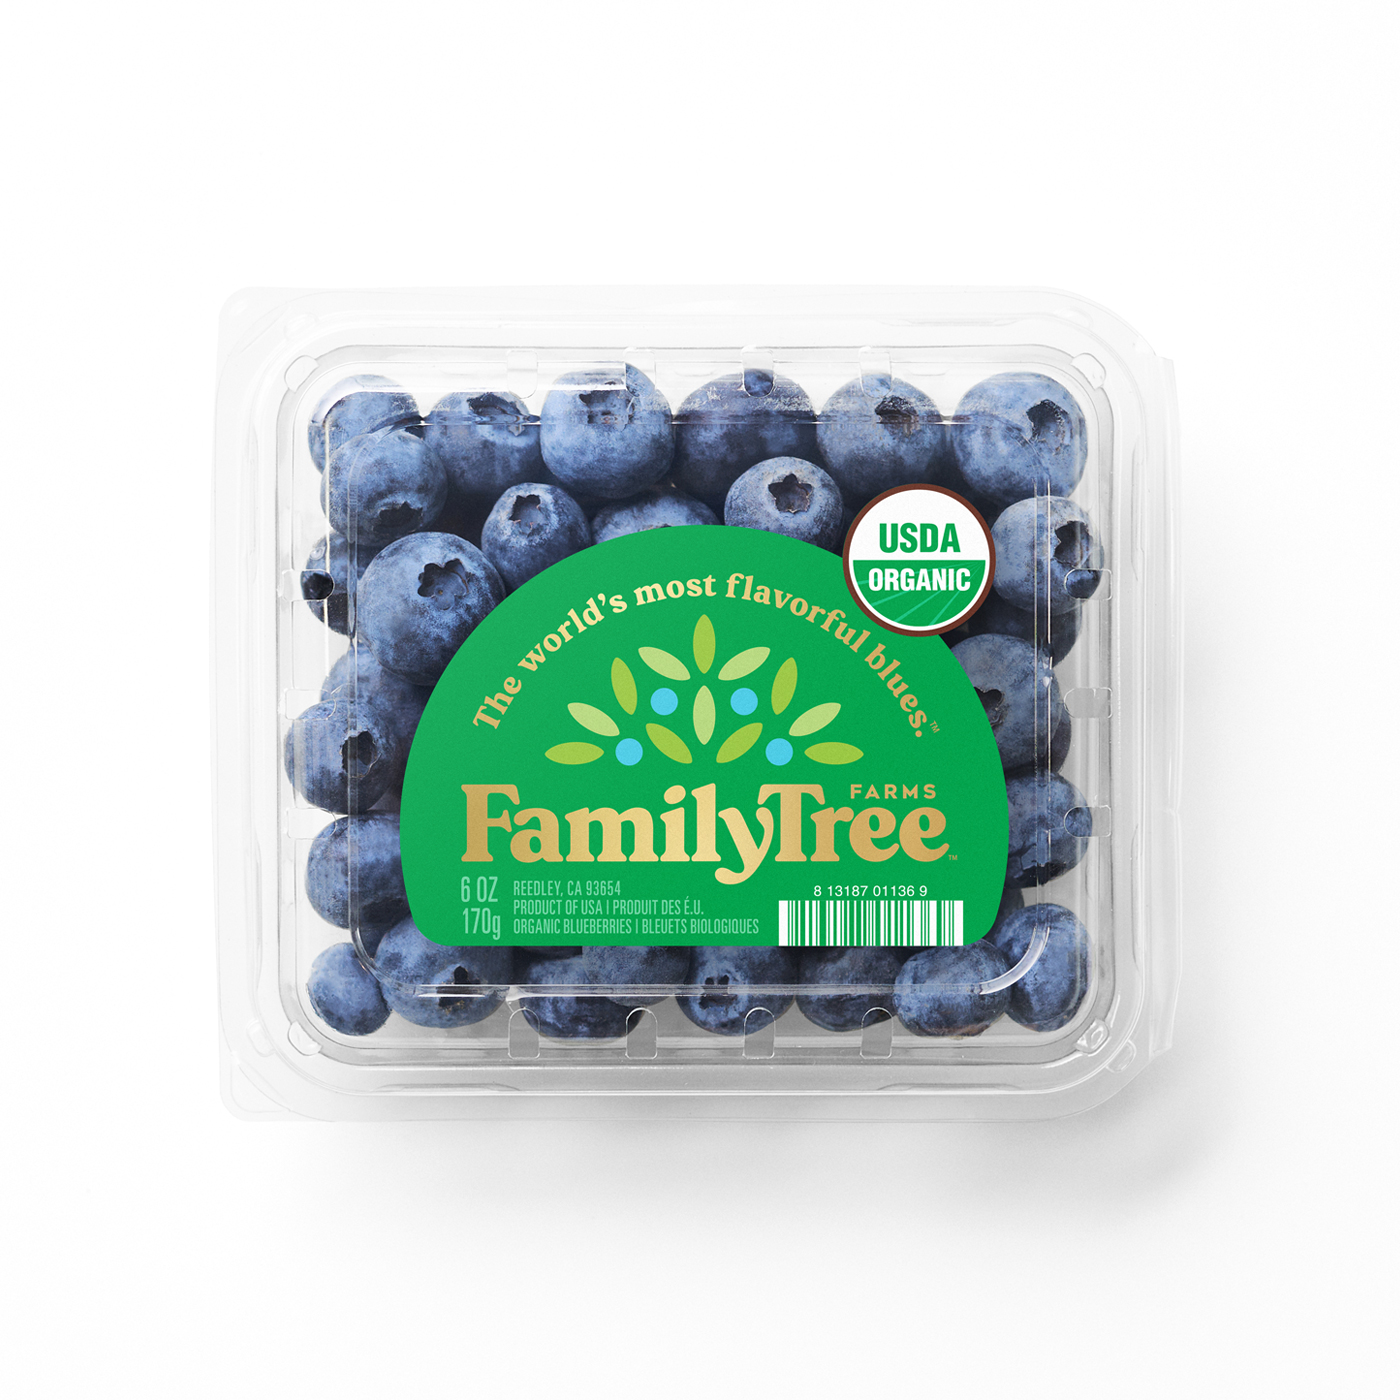 Get Jumbo Blueberries Delivered